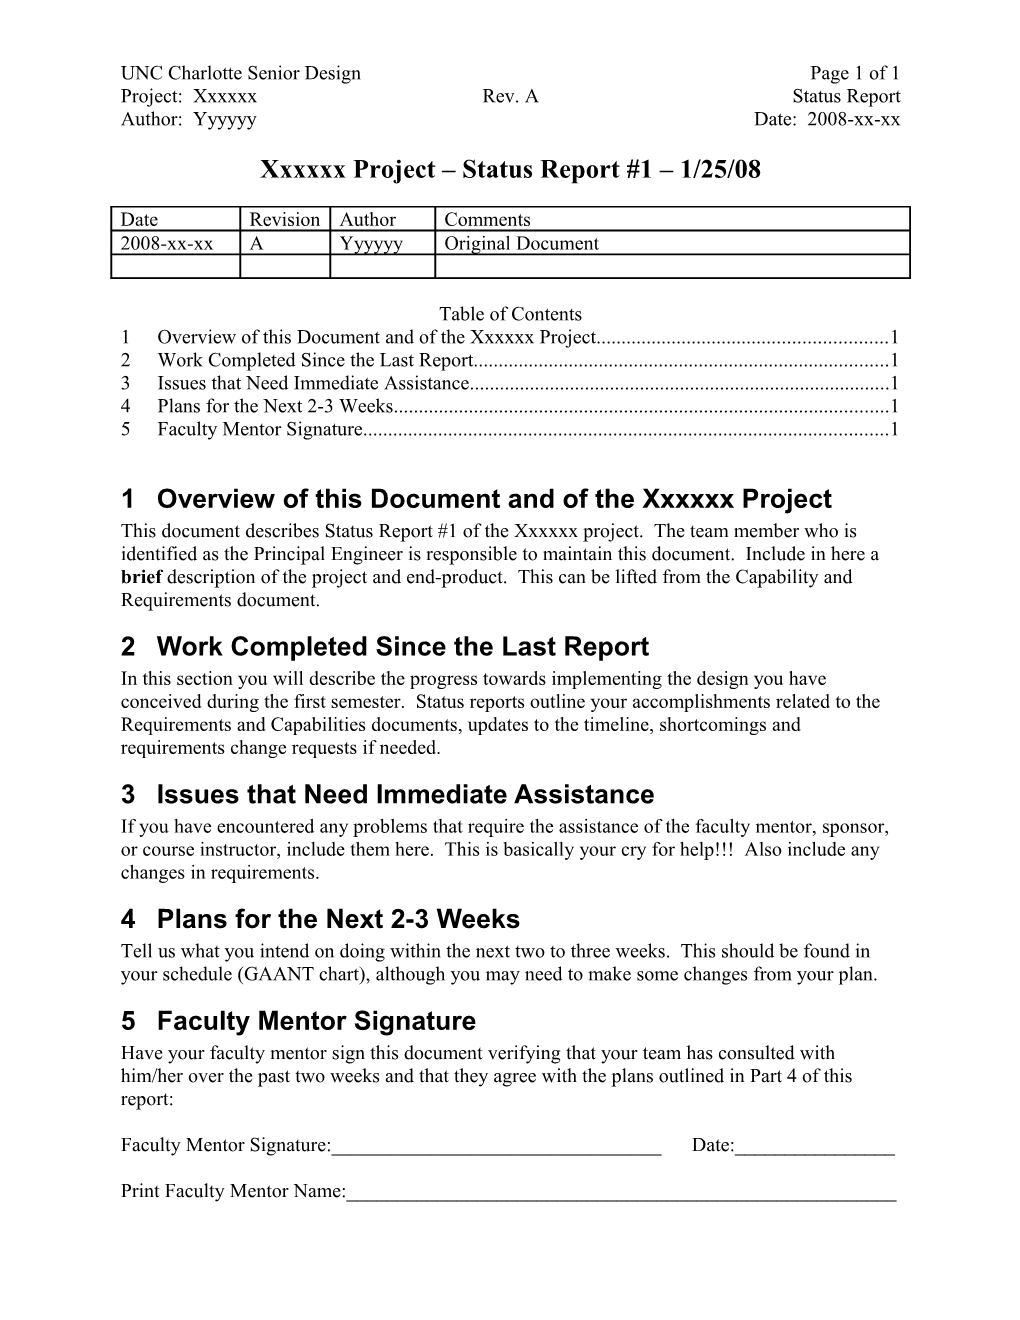 Xxxxxx Project Status Report